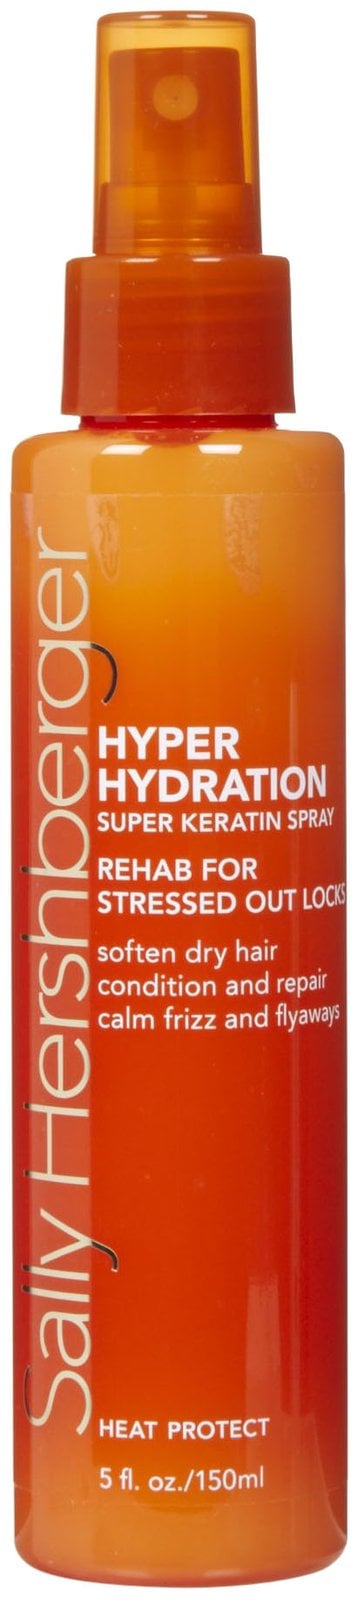 Sally Hershberger Hyper Hydration Super Keratin Spray